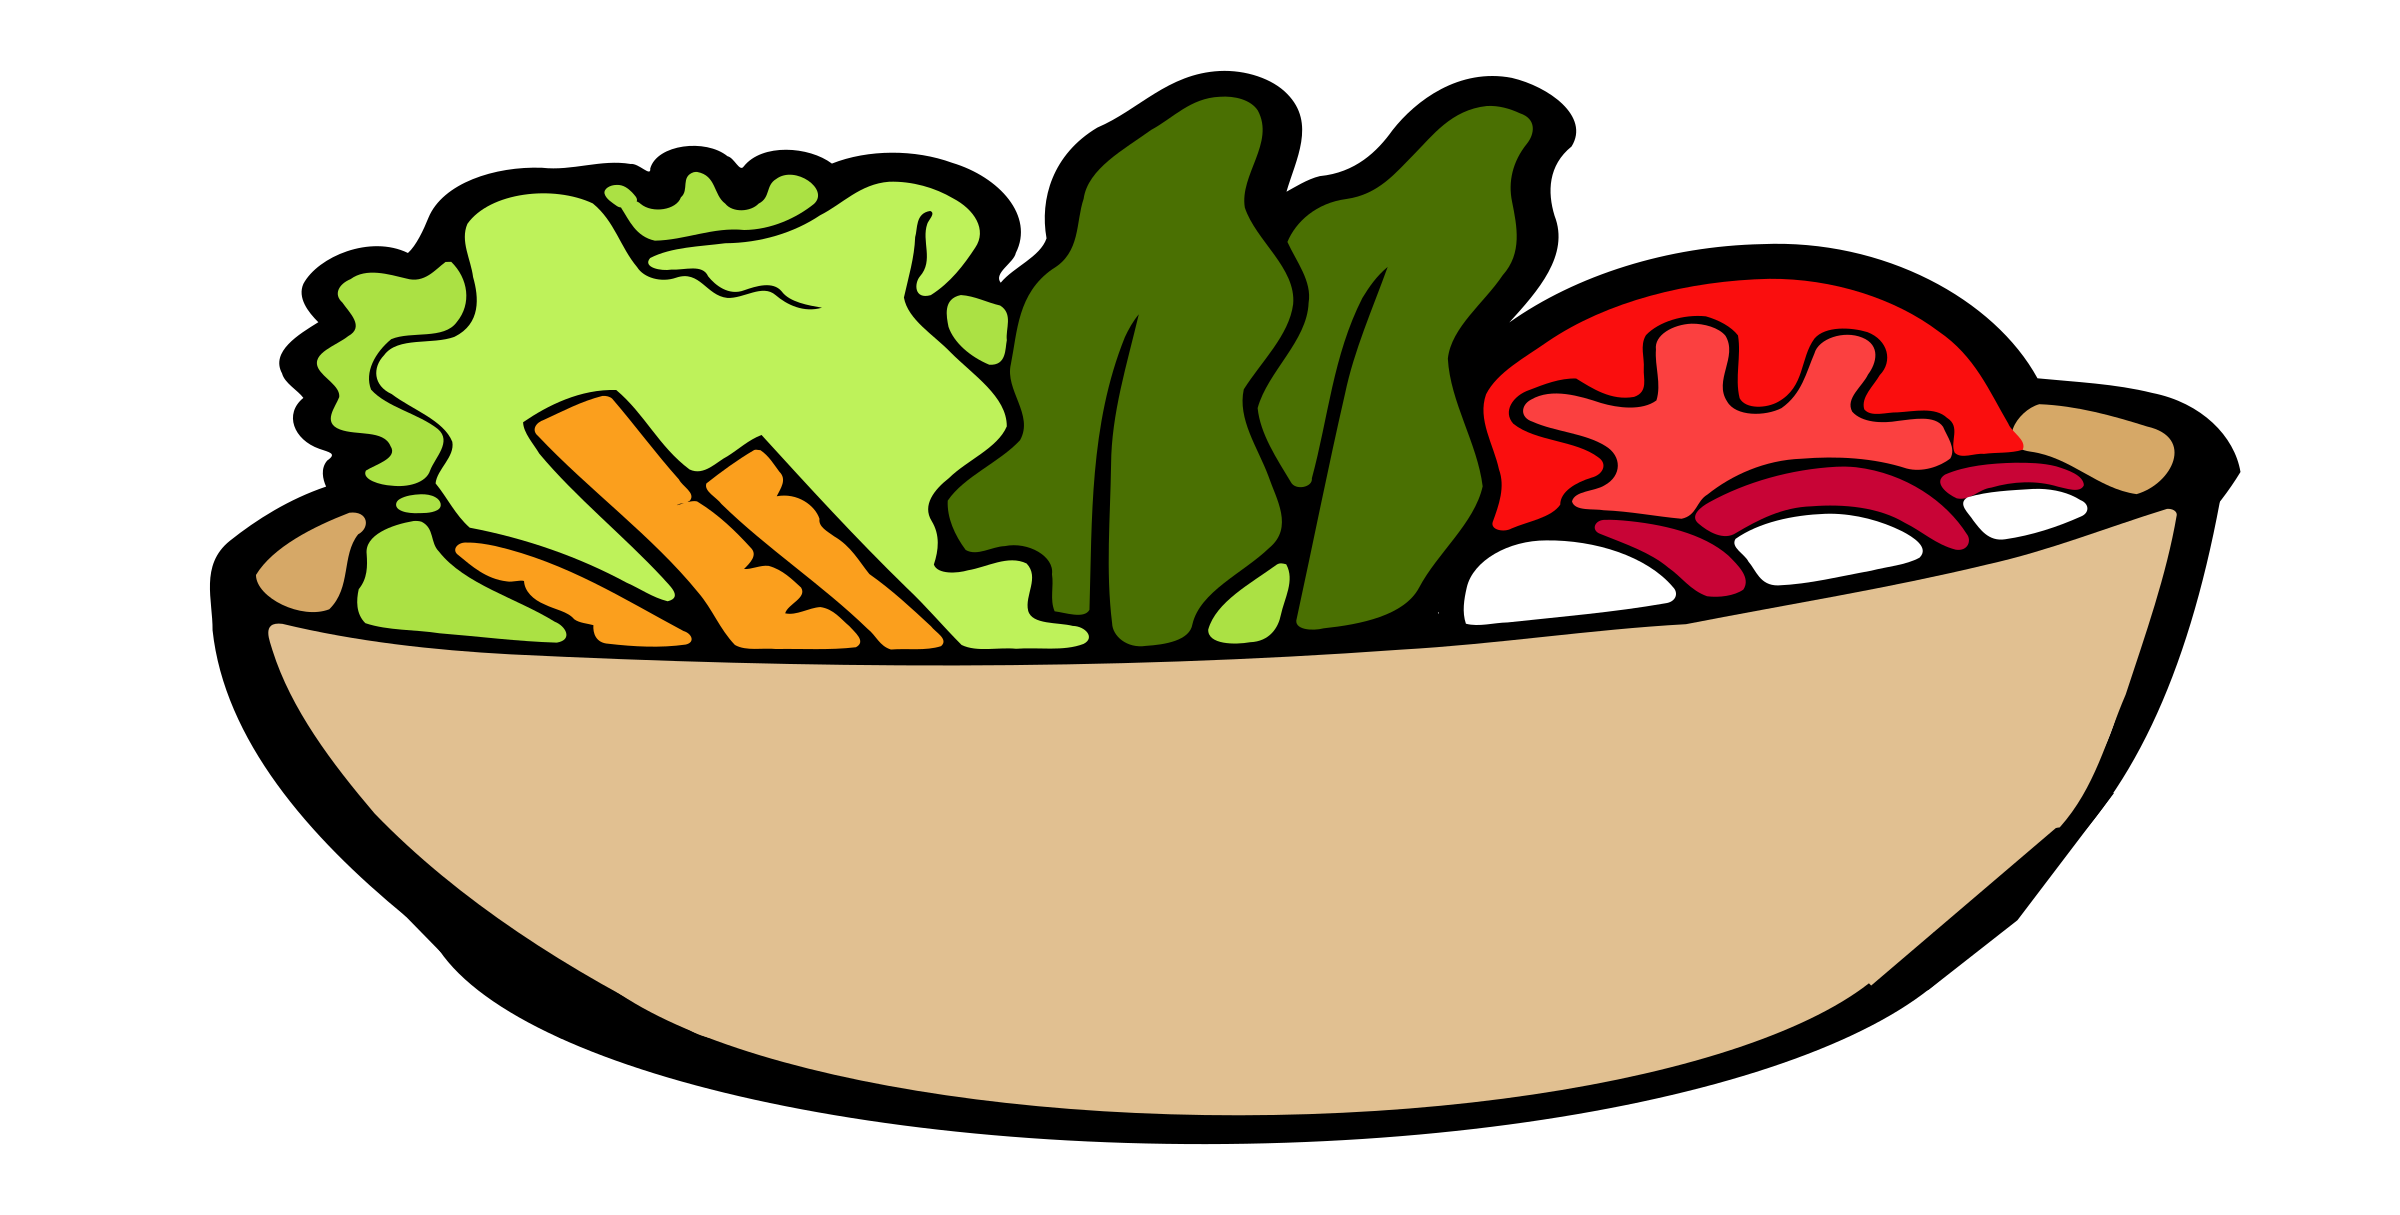 Lettuce clipart vegtable. Salad bowl big image